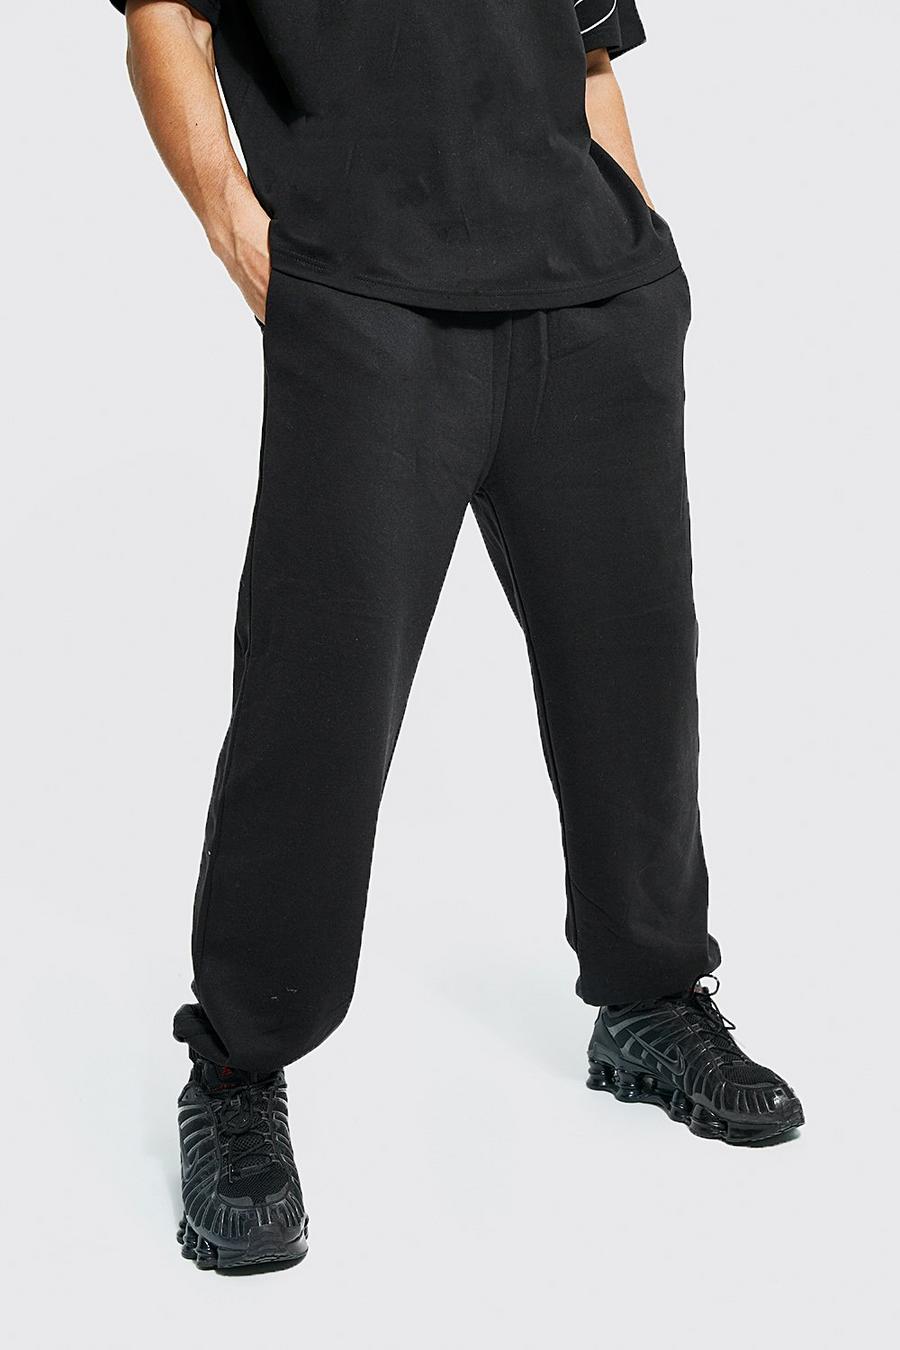 Pantalón deportivo básico holgado, Black image number 1